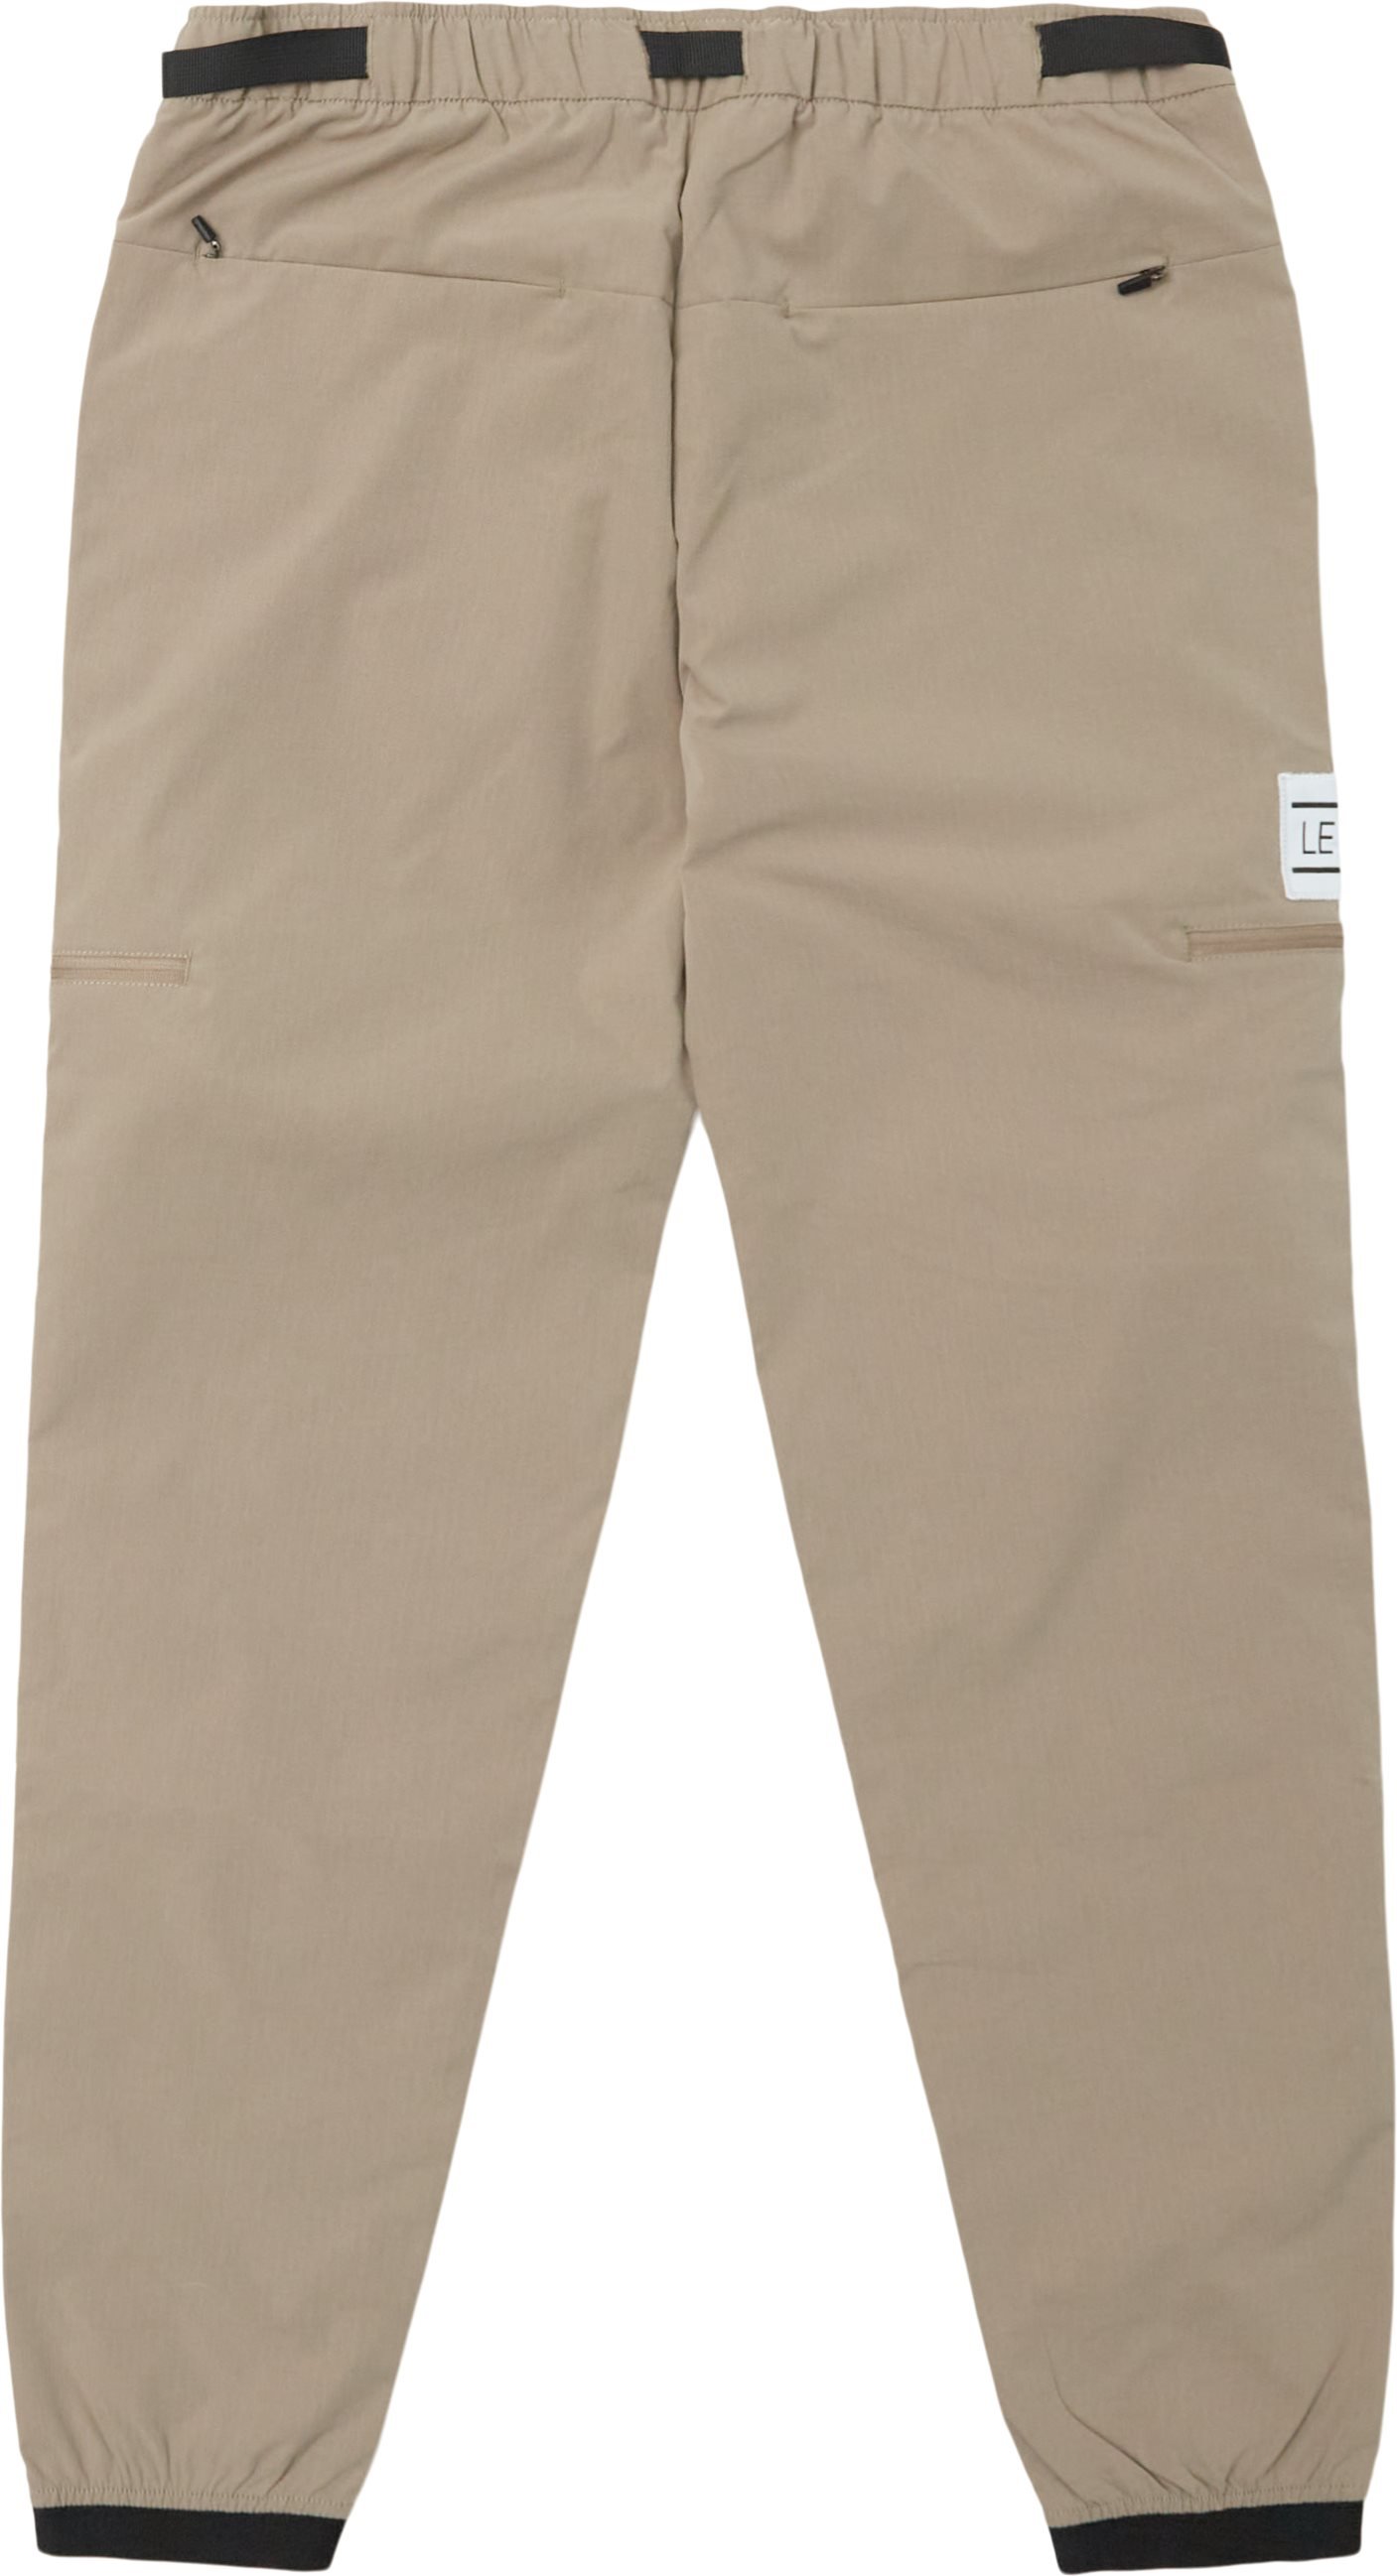 Normandy Pants - Regular fit - Sand